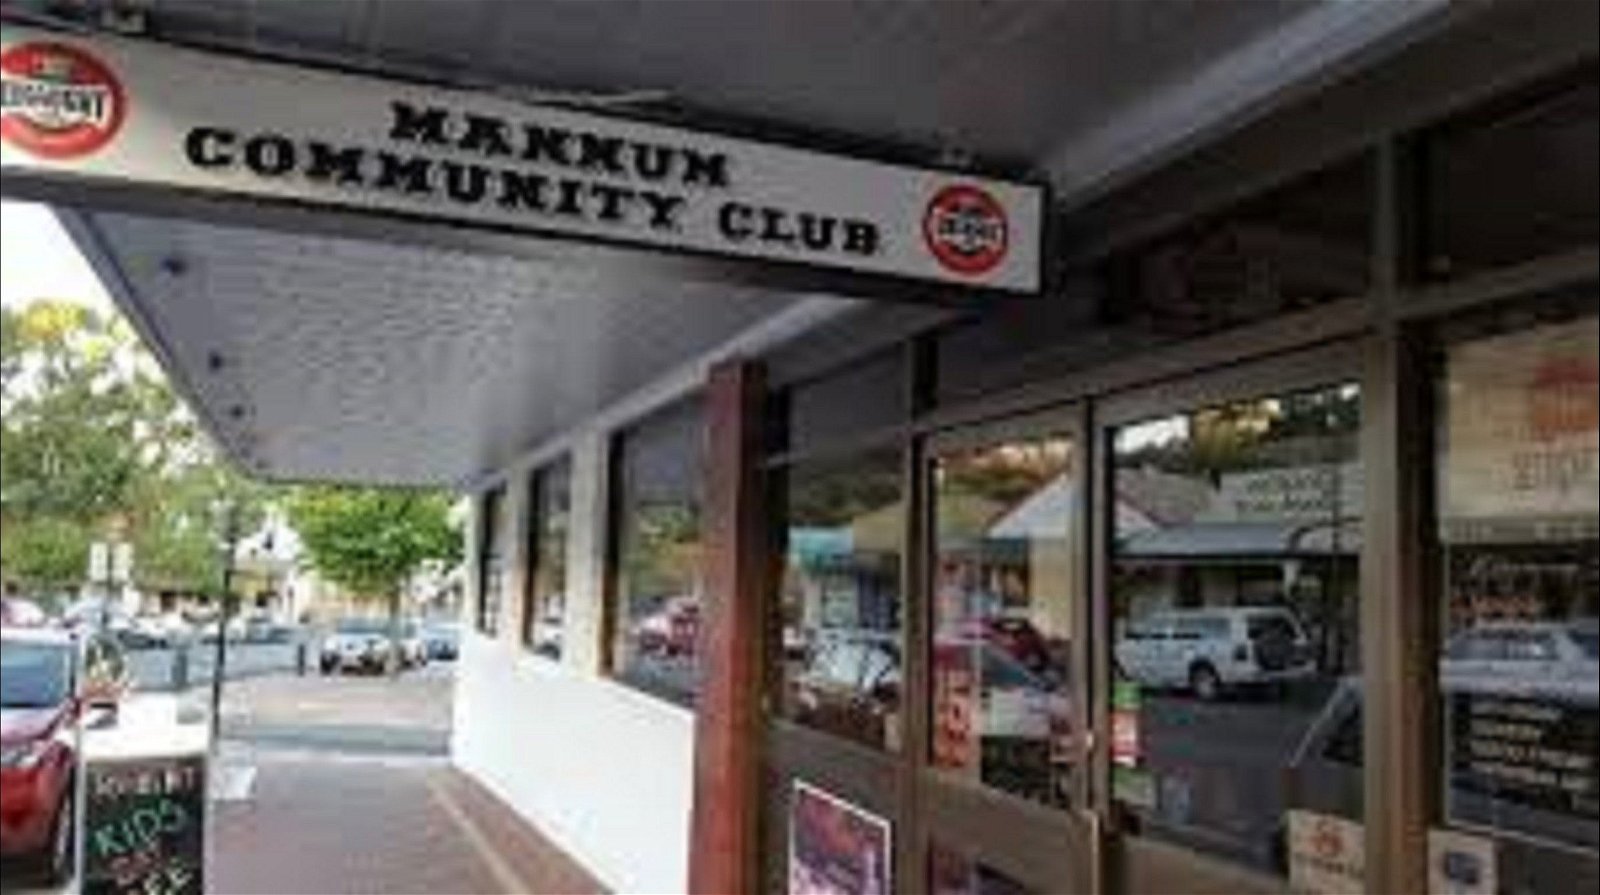 Mannum Community Club - Food Delivery Shop